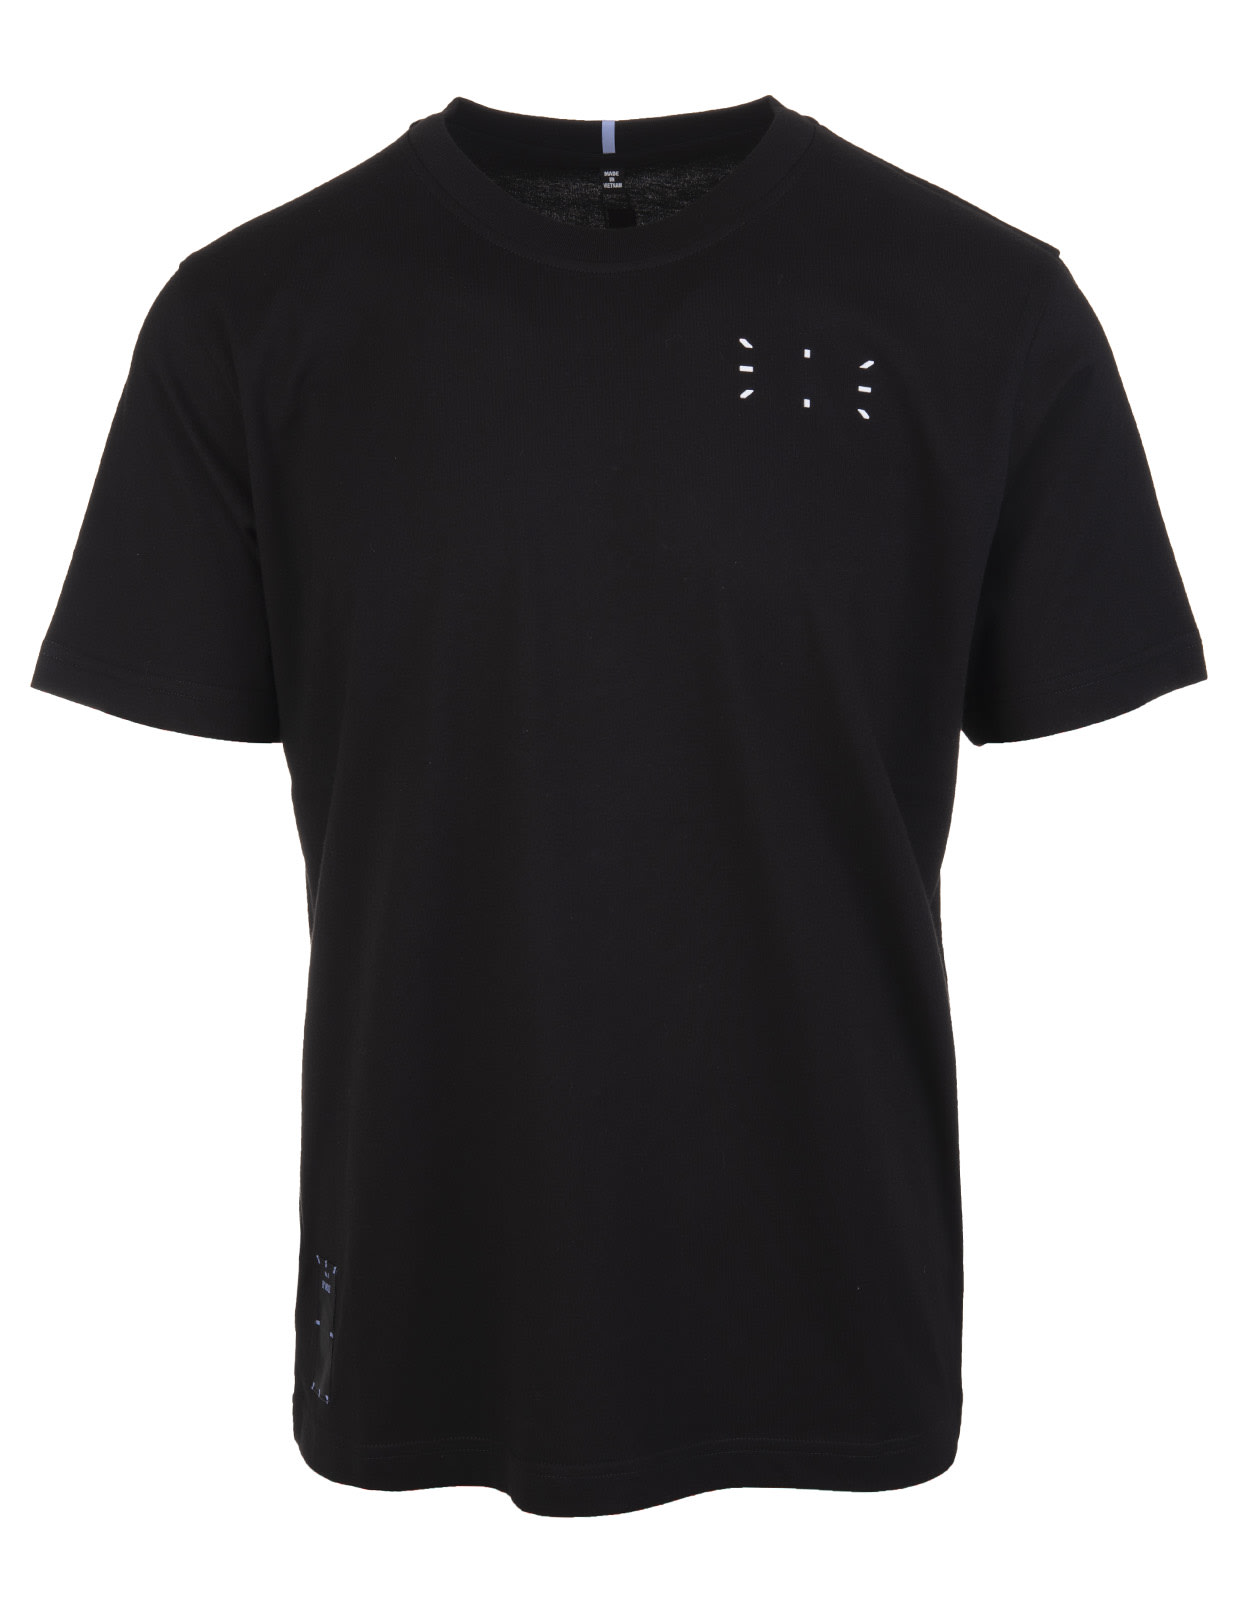 McQ Alexander McQueen Black Graphic-print Cotton T-shirt Man